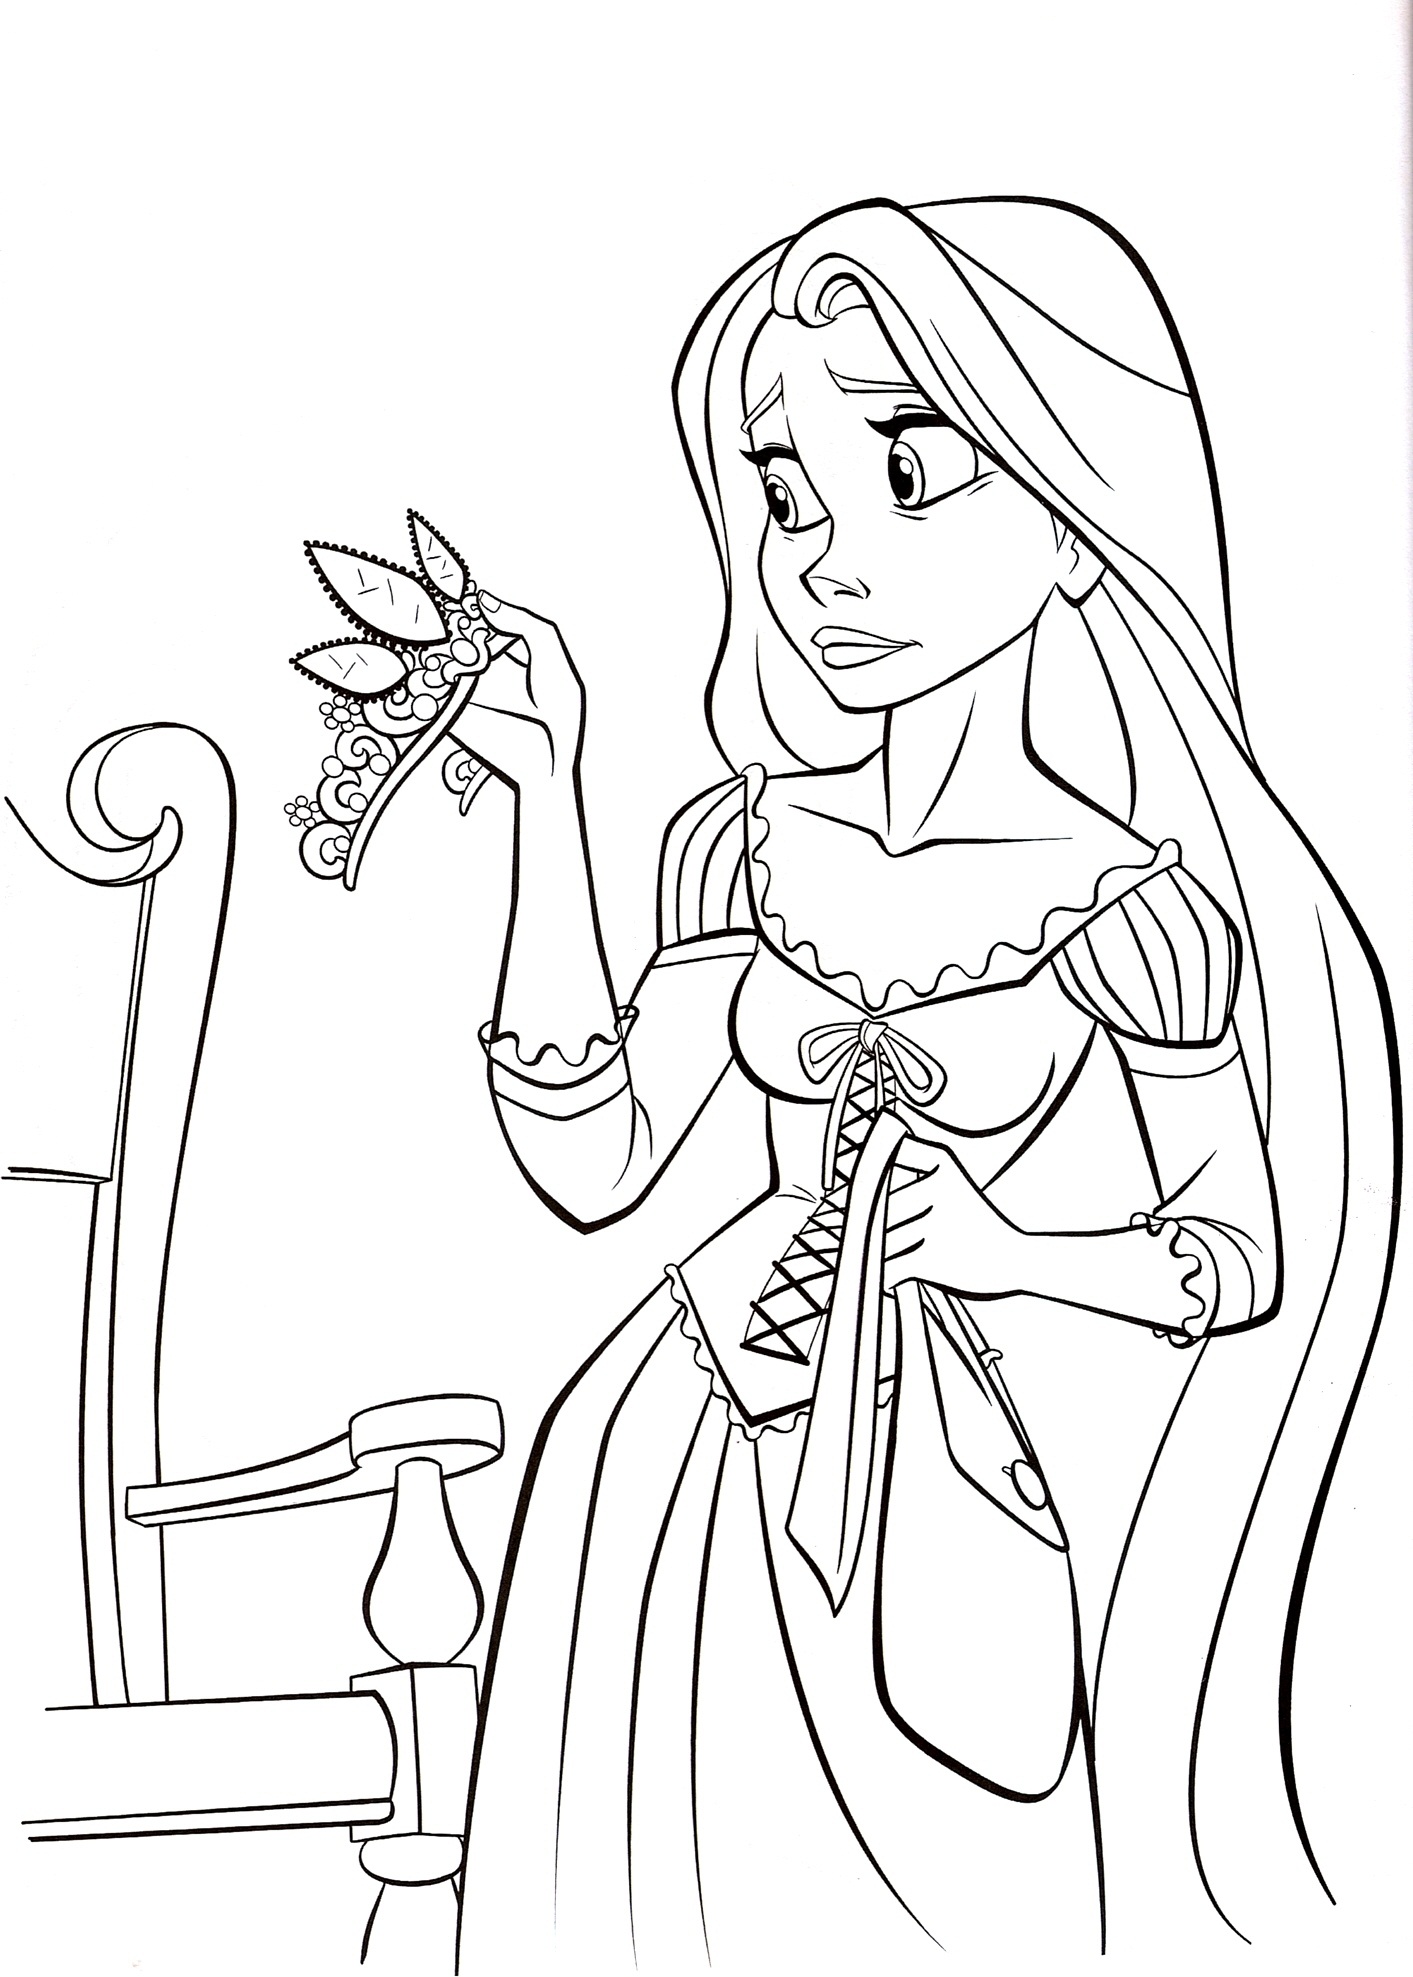 Disney Princess Rapunzel Coloring Pages Coloring Pages For Kids ...